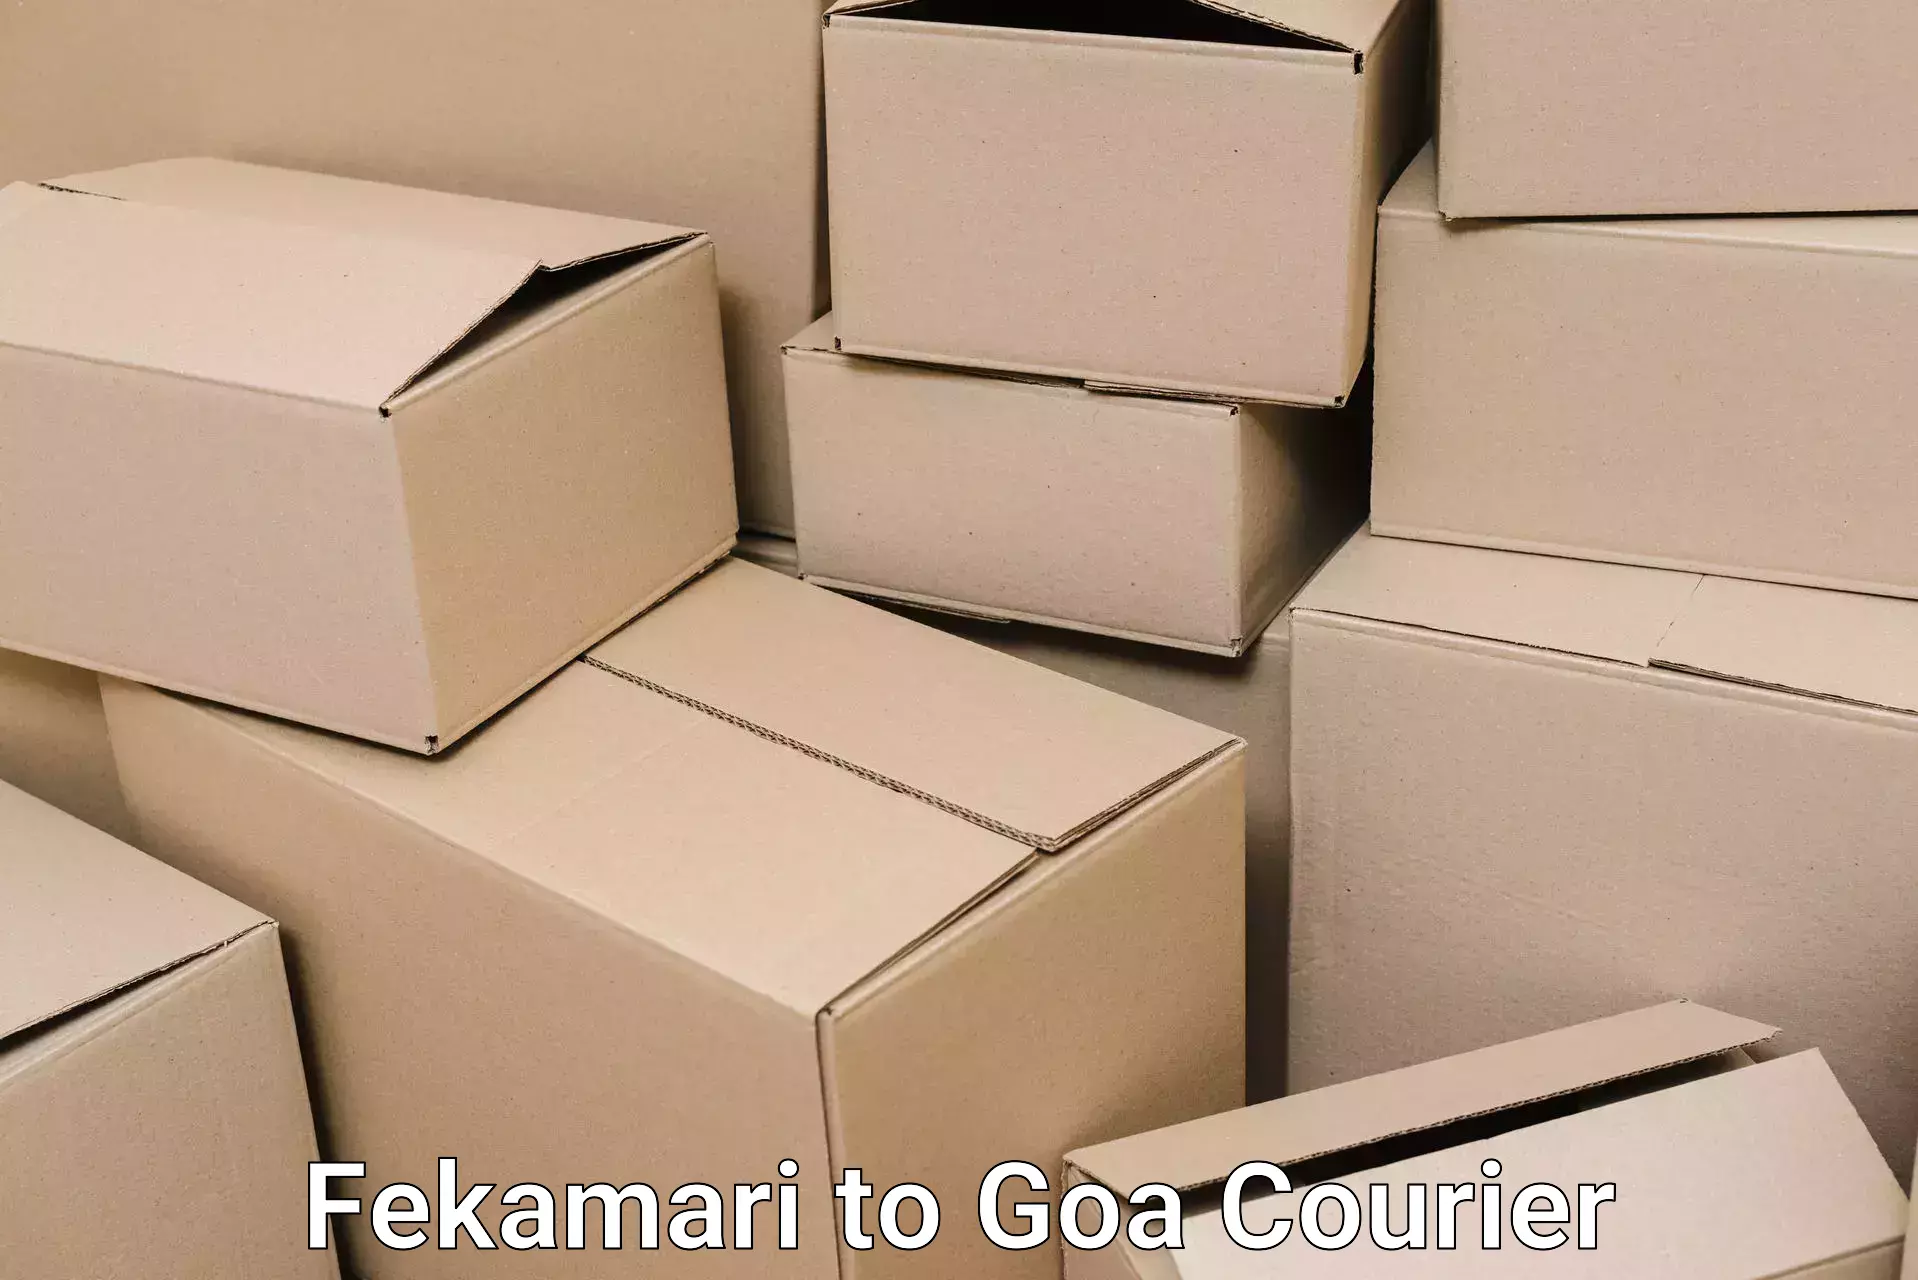 Home moving specialists Fekamari to Goa